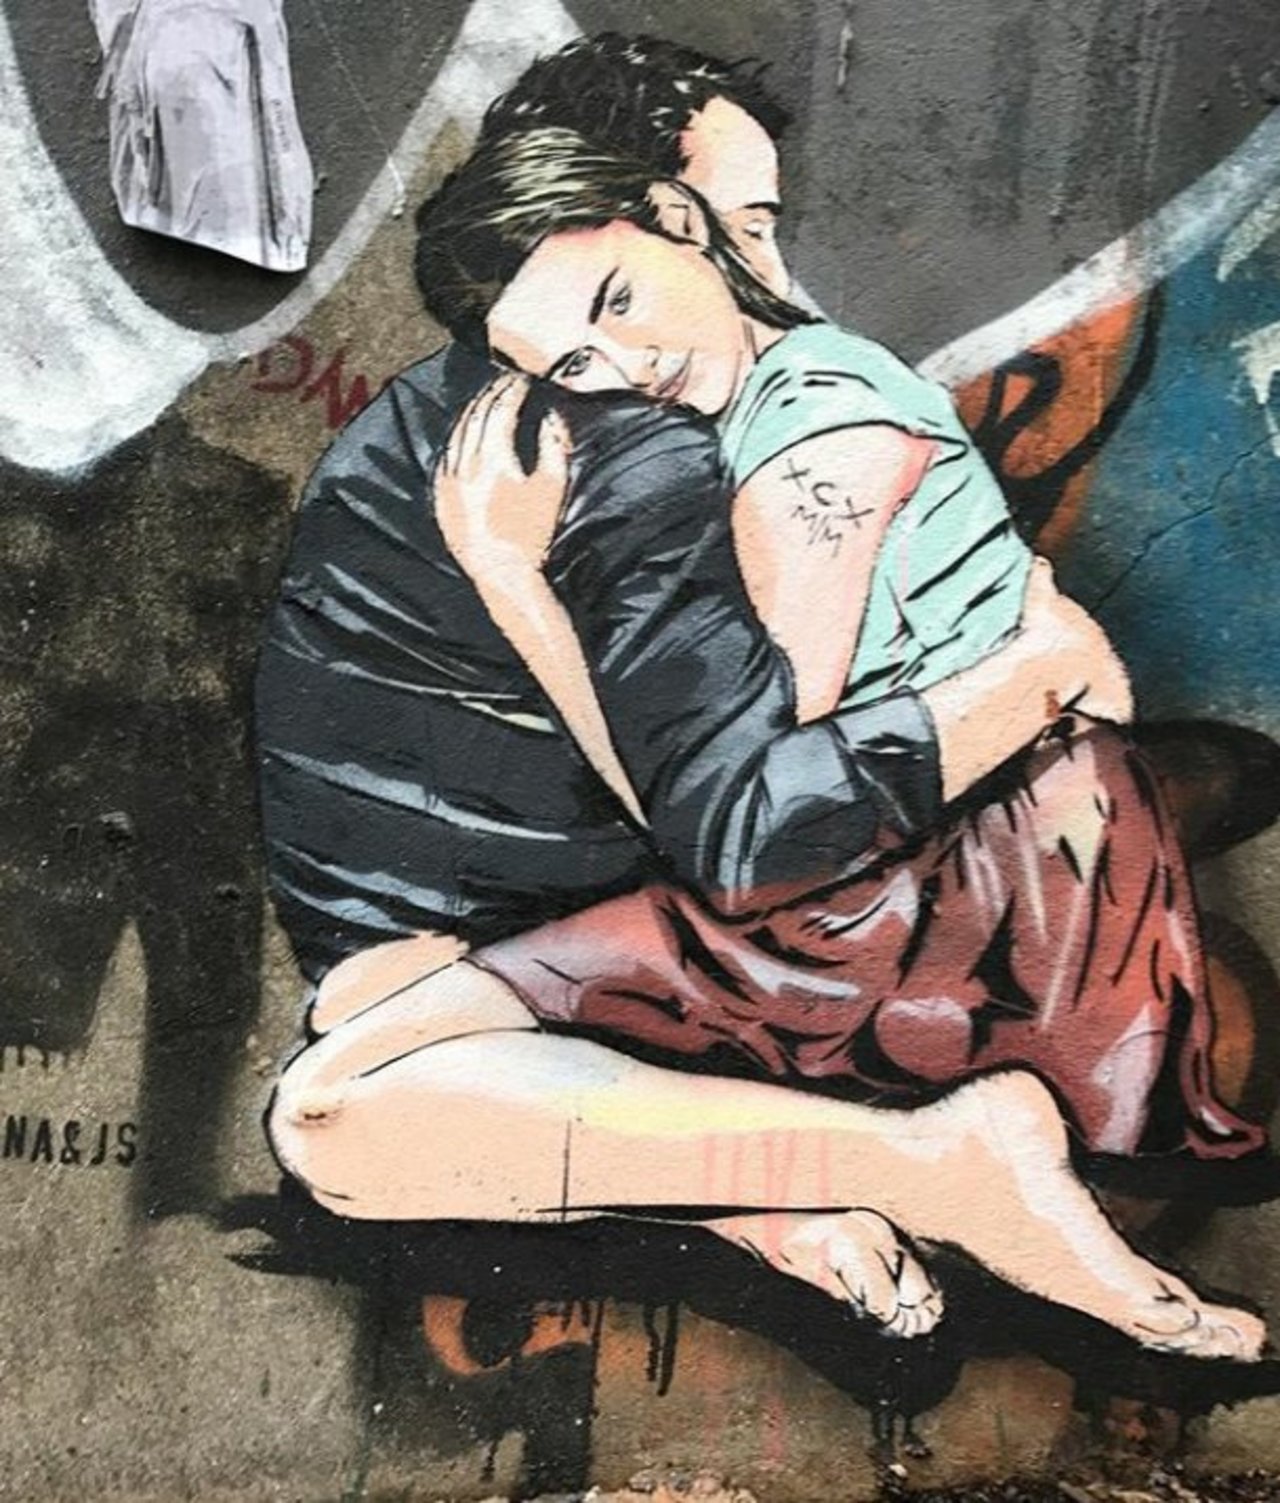 "Feeling the hug"#London #streetart https://t.co/ta7T02Qtjx